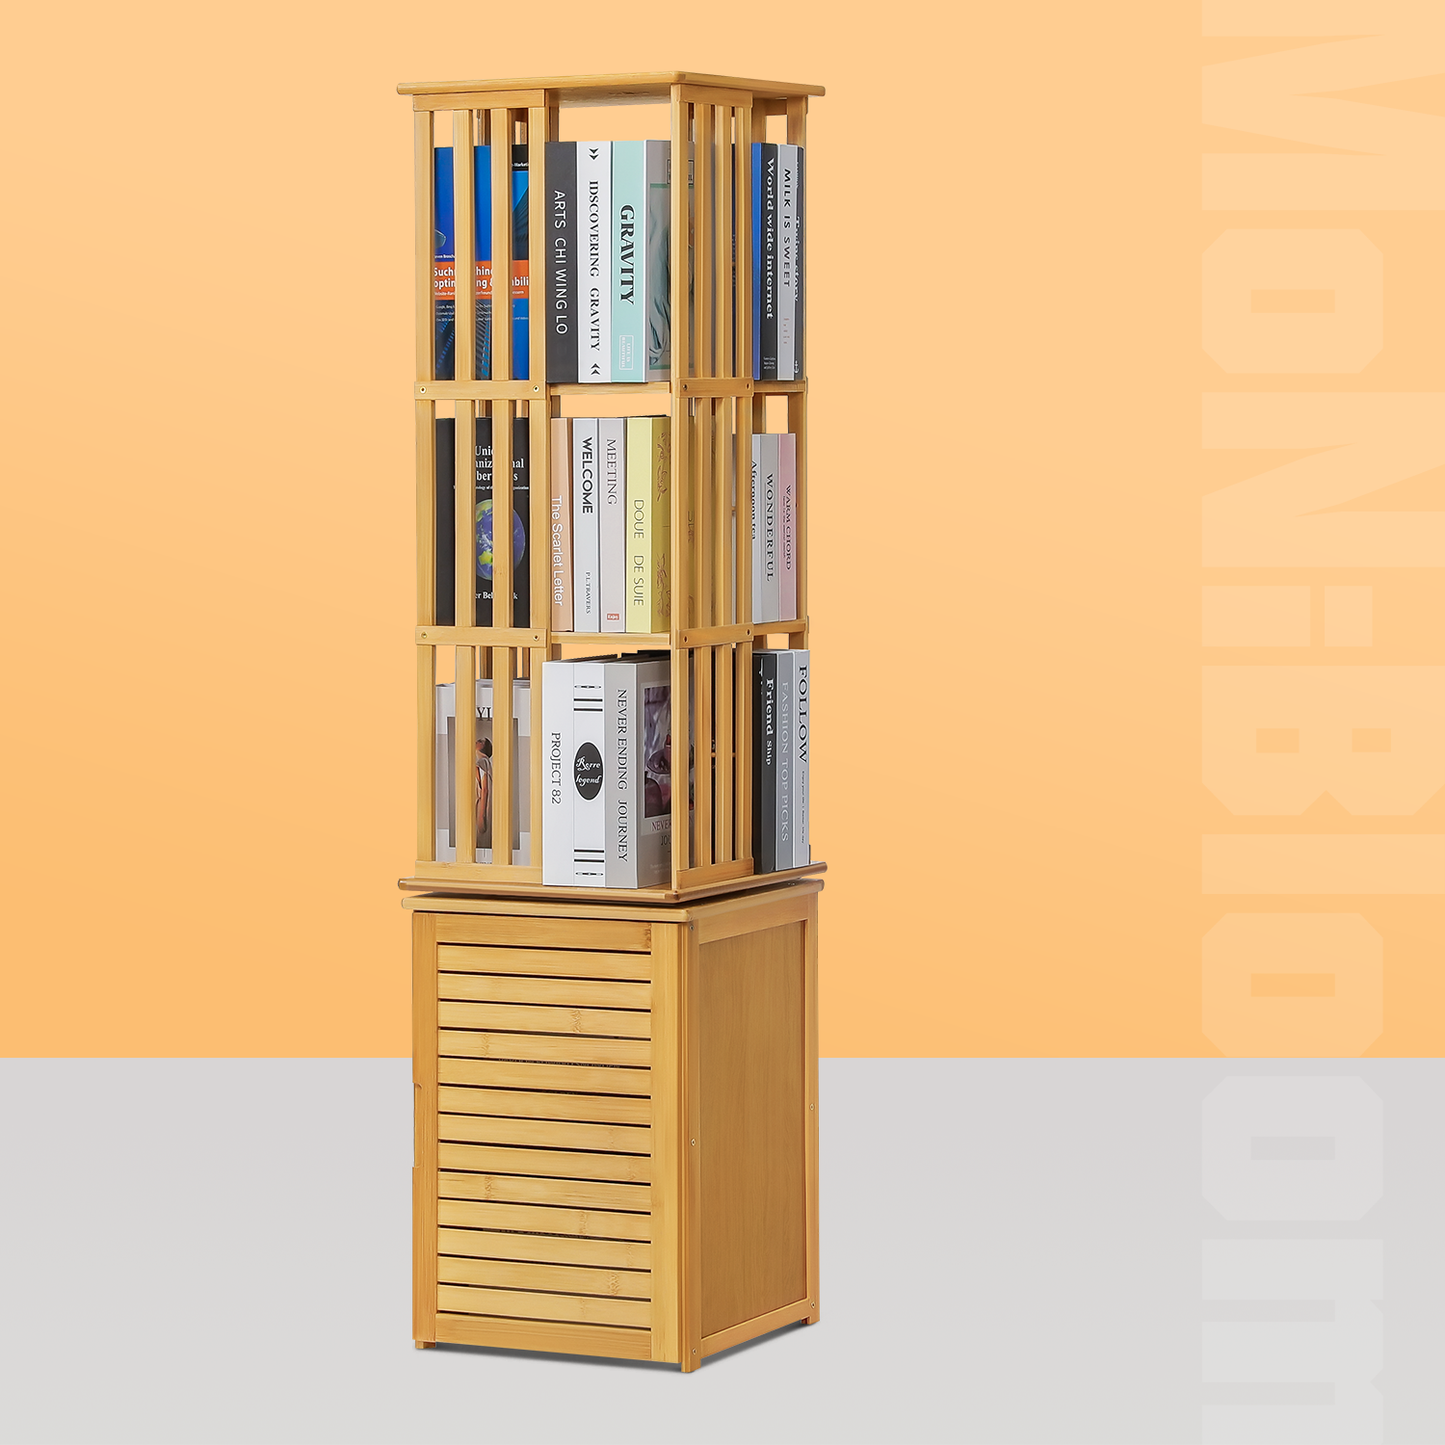 360°Swivel Bookshelf - Vertical Fence Pattern - with Bottom Cabinet Storage - 15" - Natural